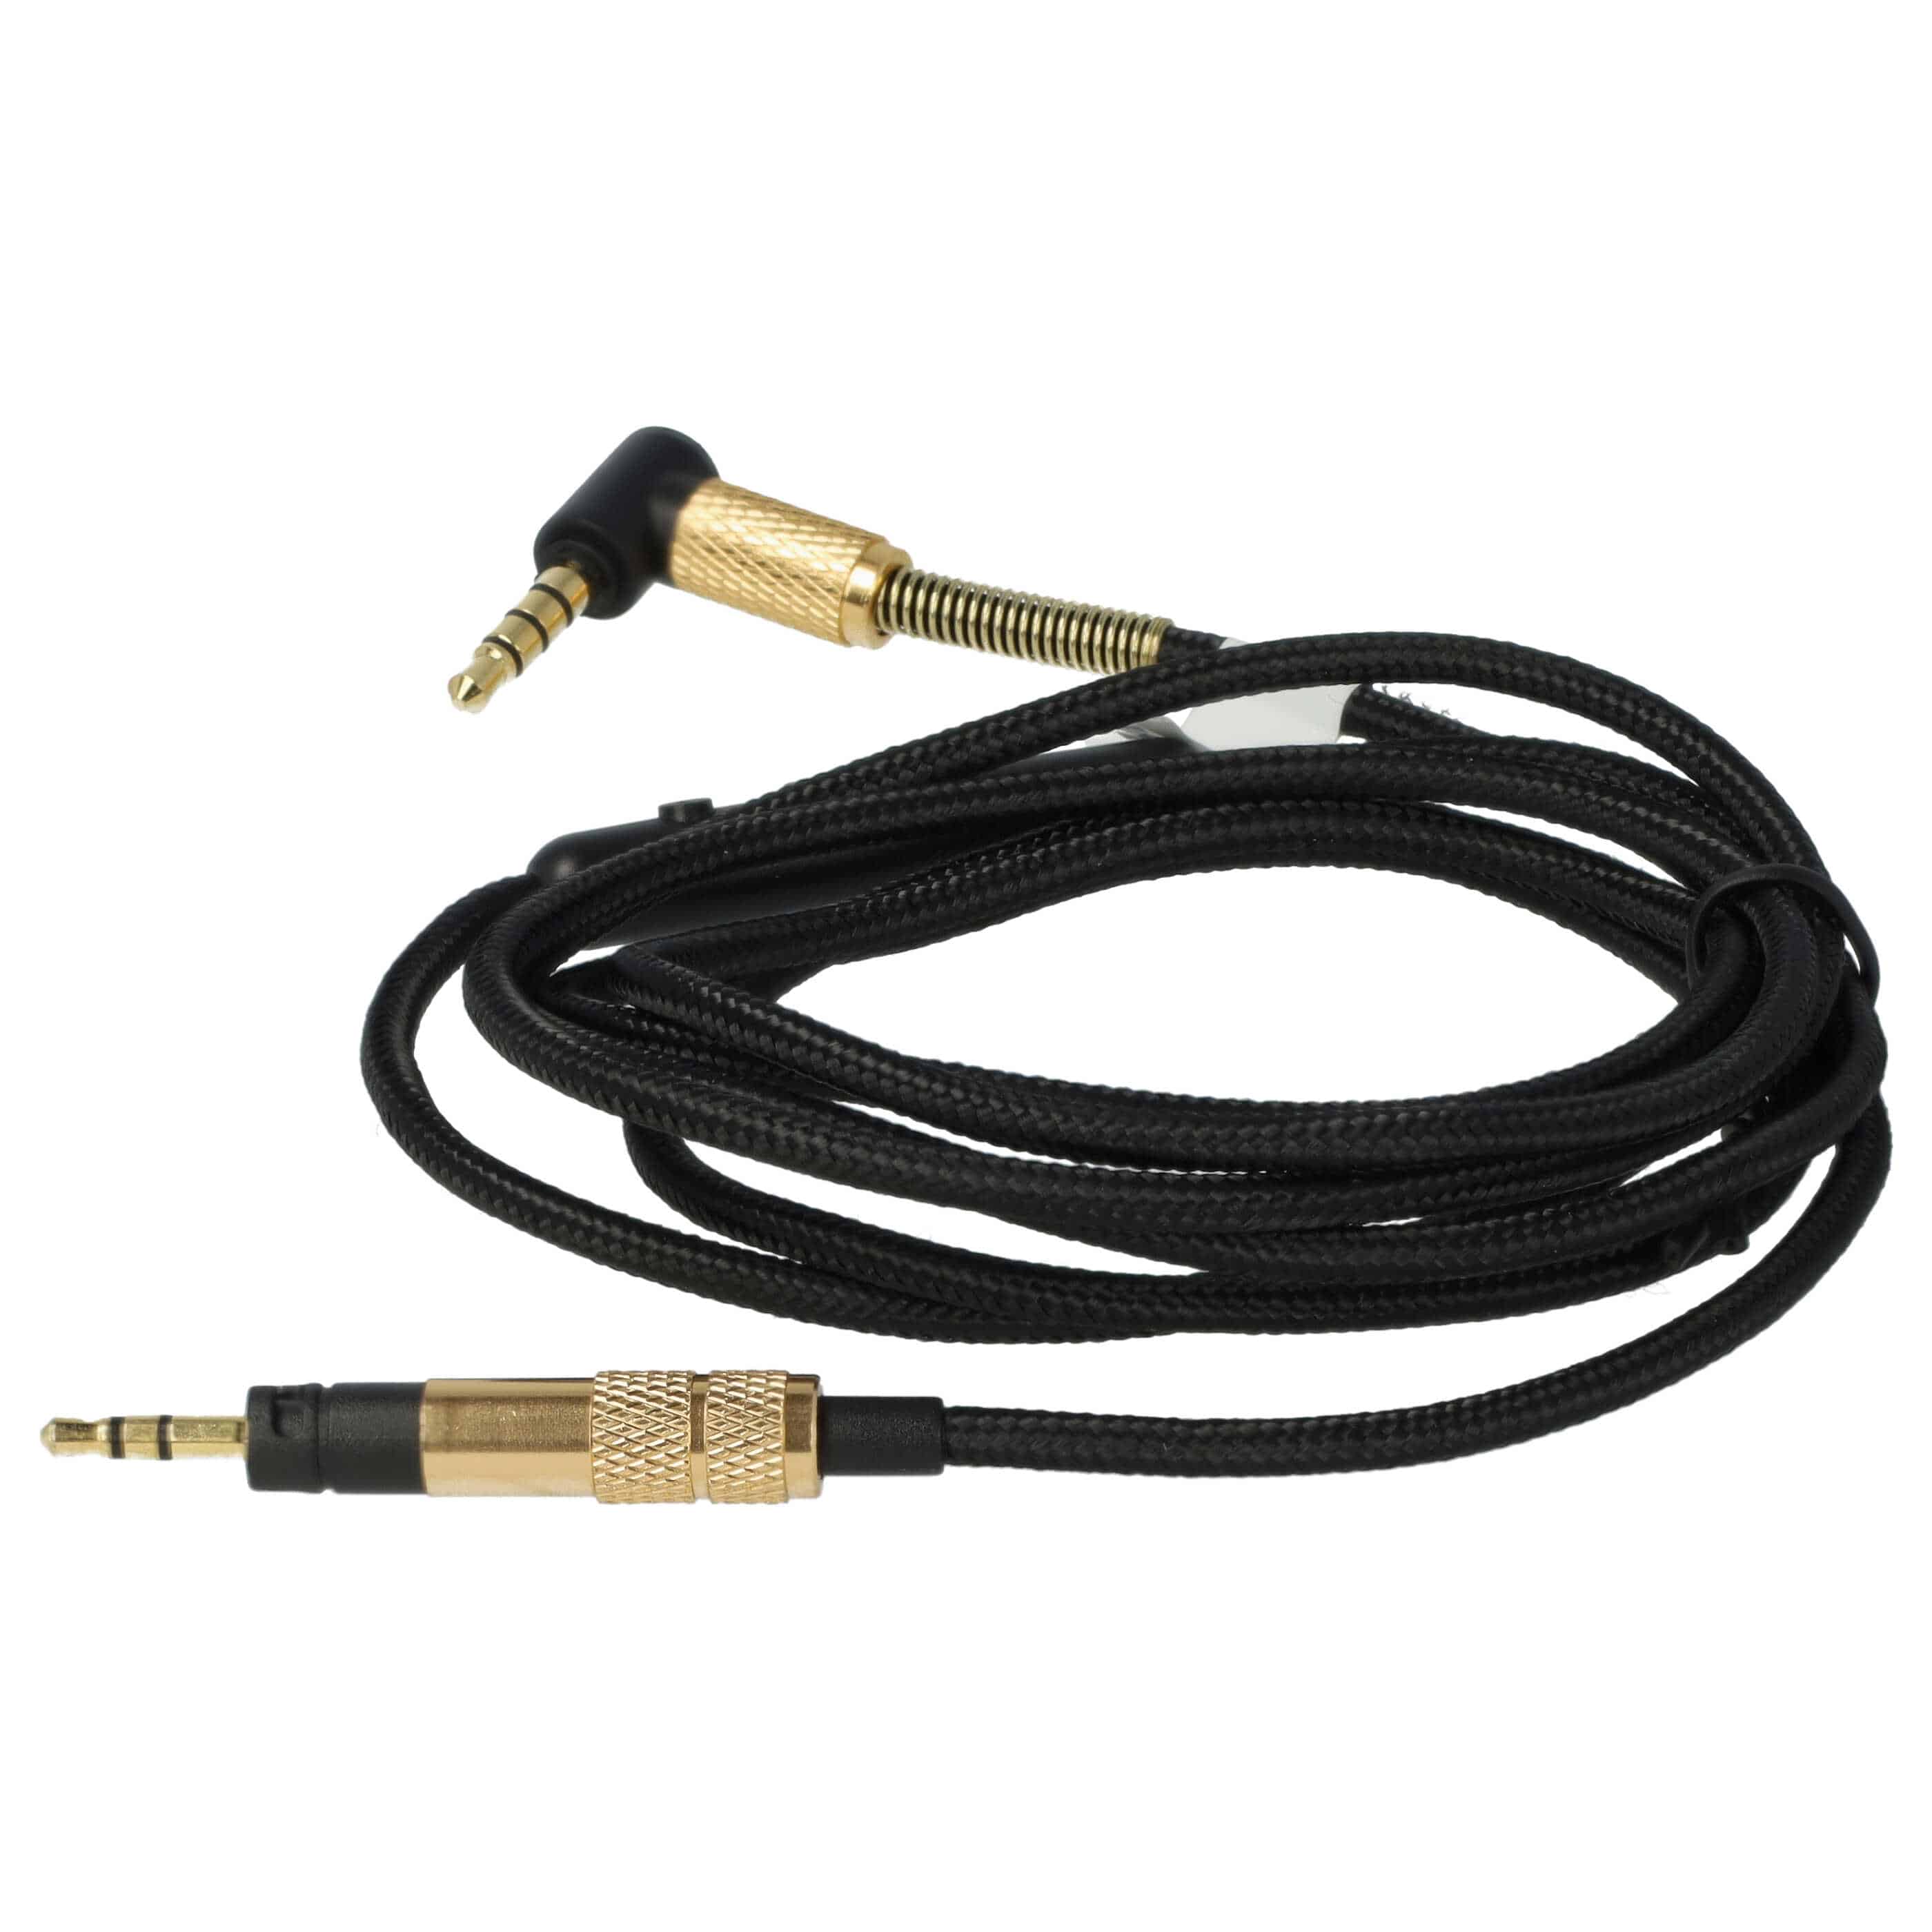 Headphones Cable suitable for Sennheiser Momentum 2.0 etc., 140 cm